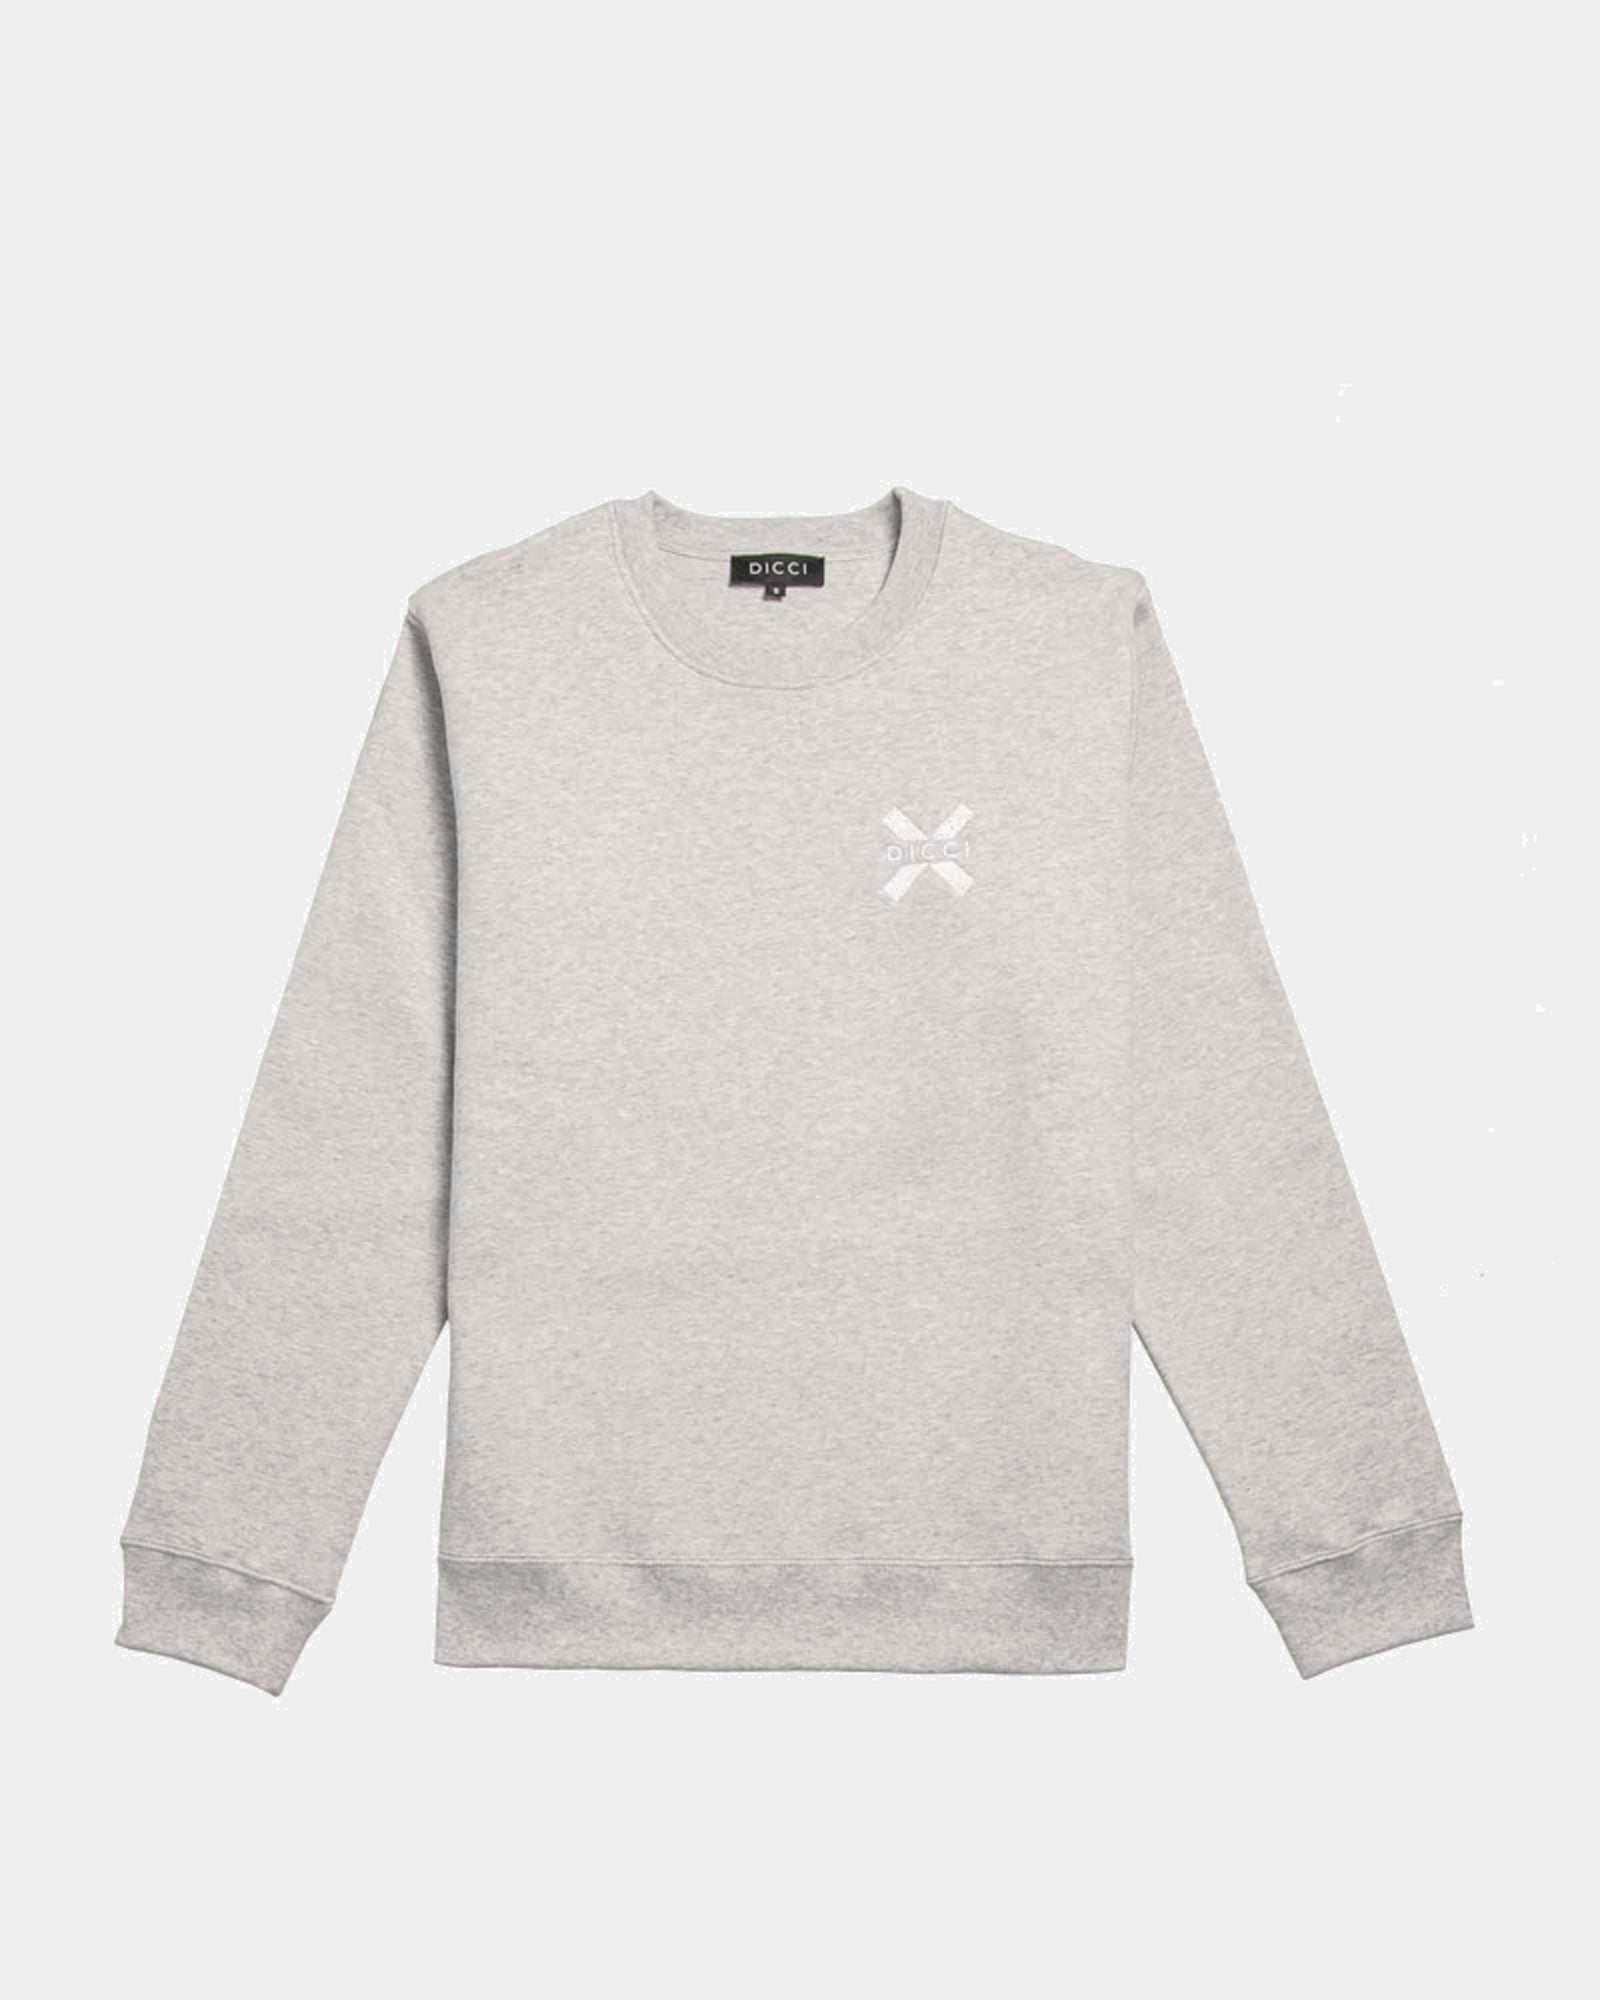 Grey Sweatshirt with Logo Embroided - Online Unisex Clothing - Dicci